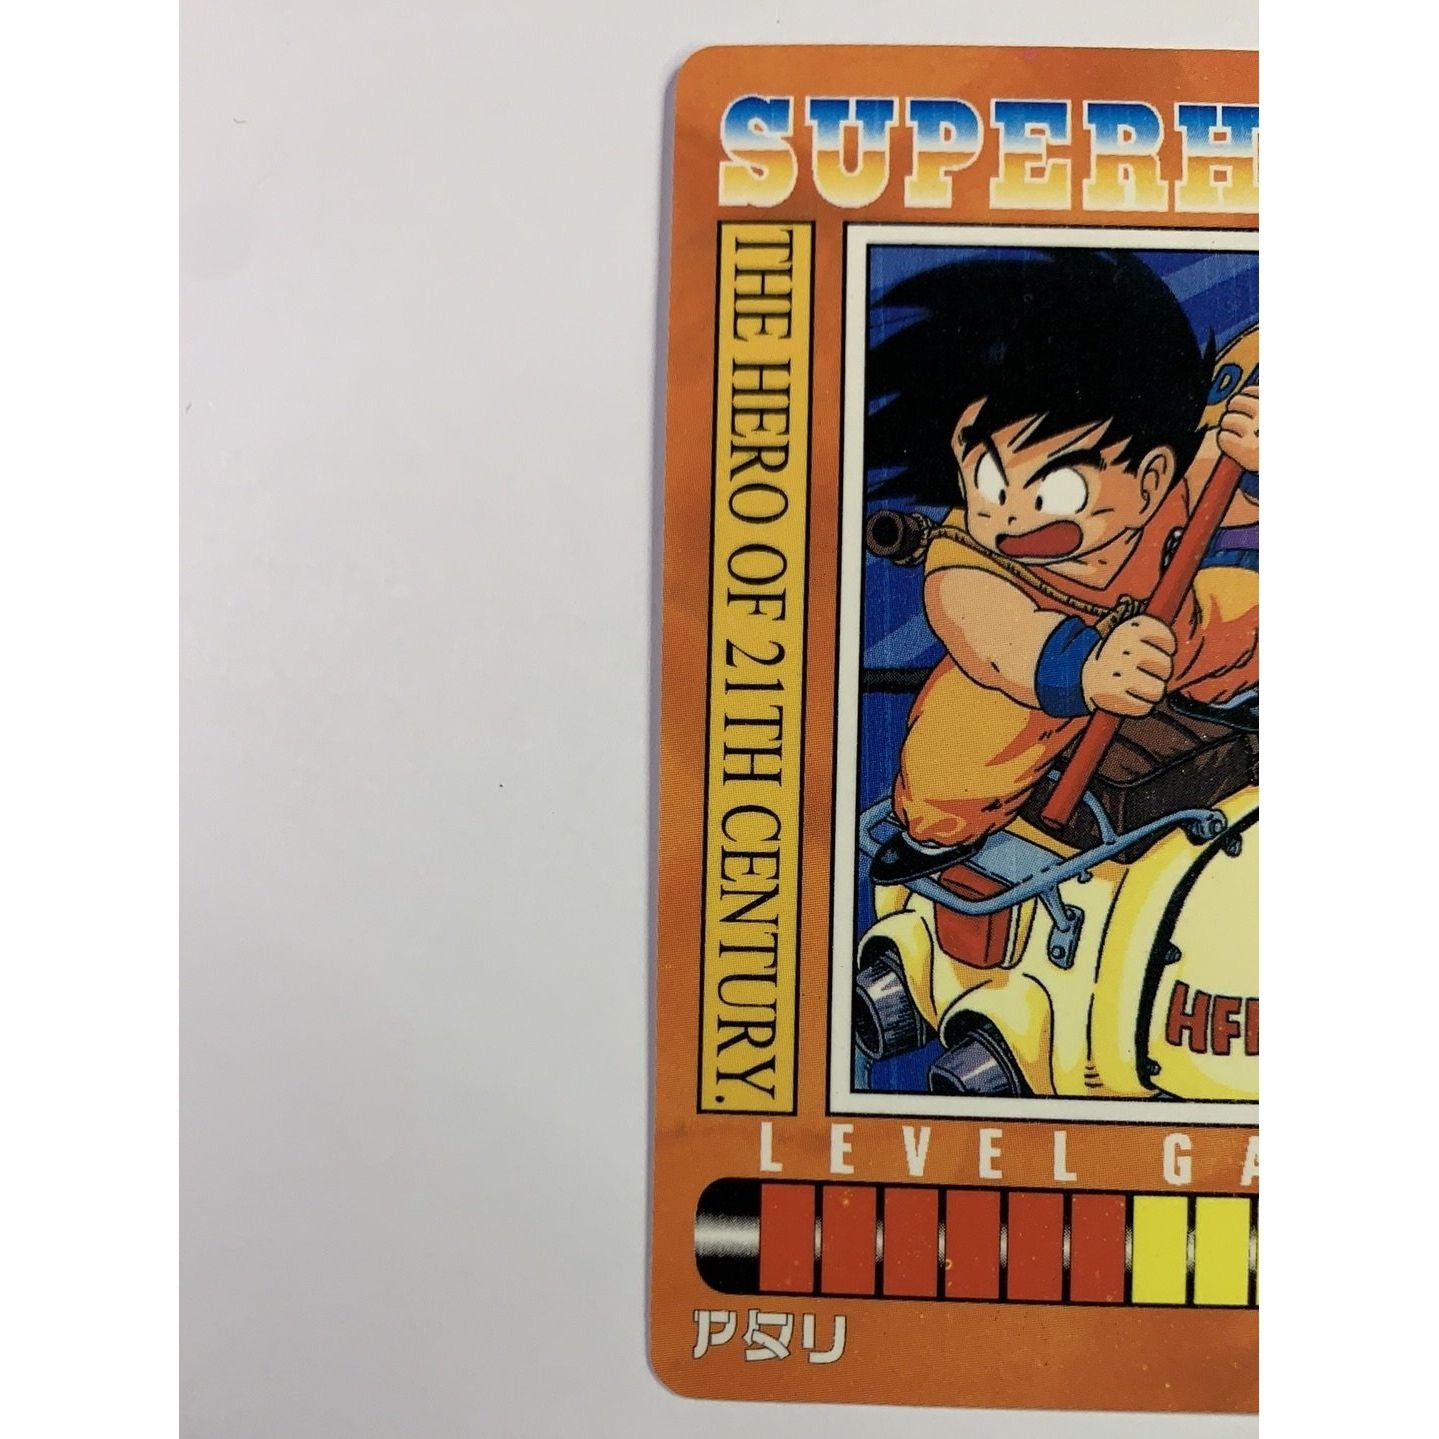  1995 Cardass Adali Super Hero Special Card S-100 Silver Foil Goku & Shu  Local Legends Cards & Collectibles